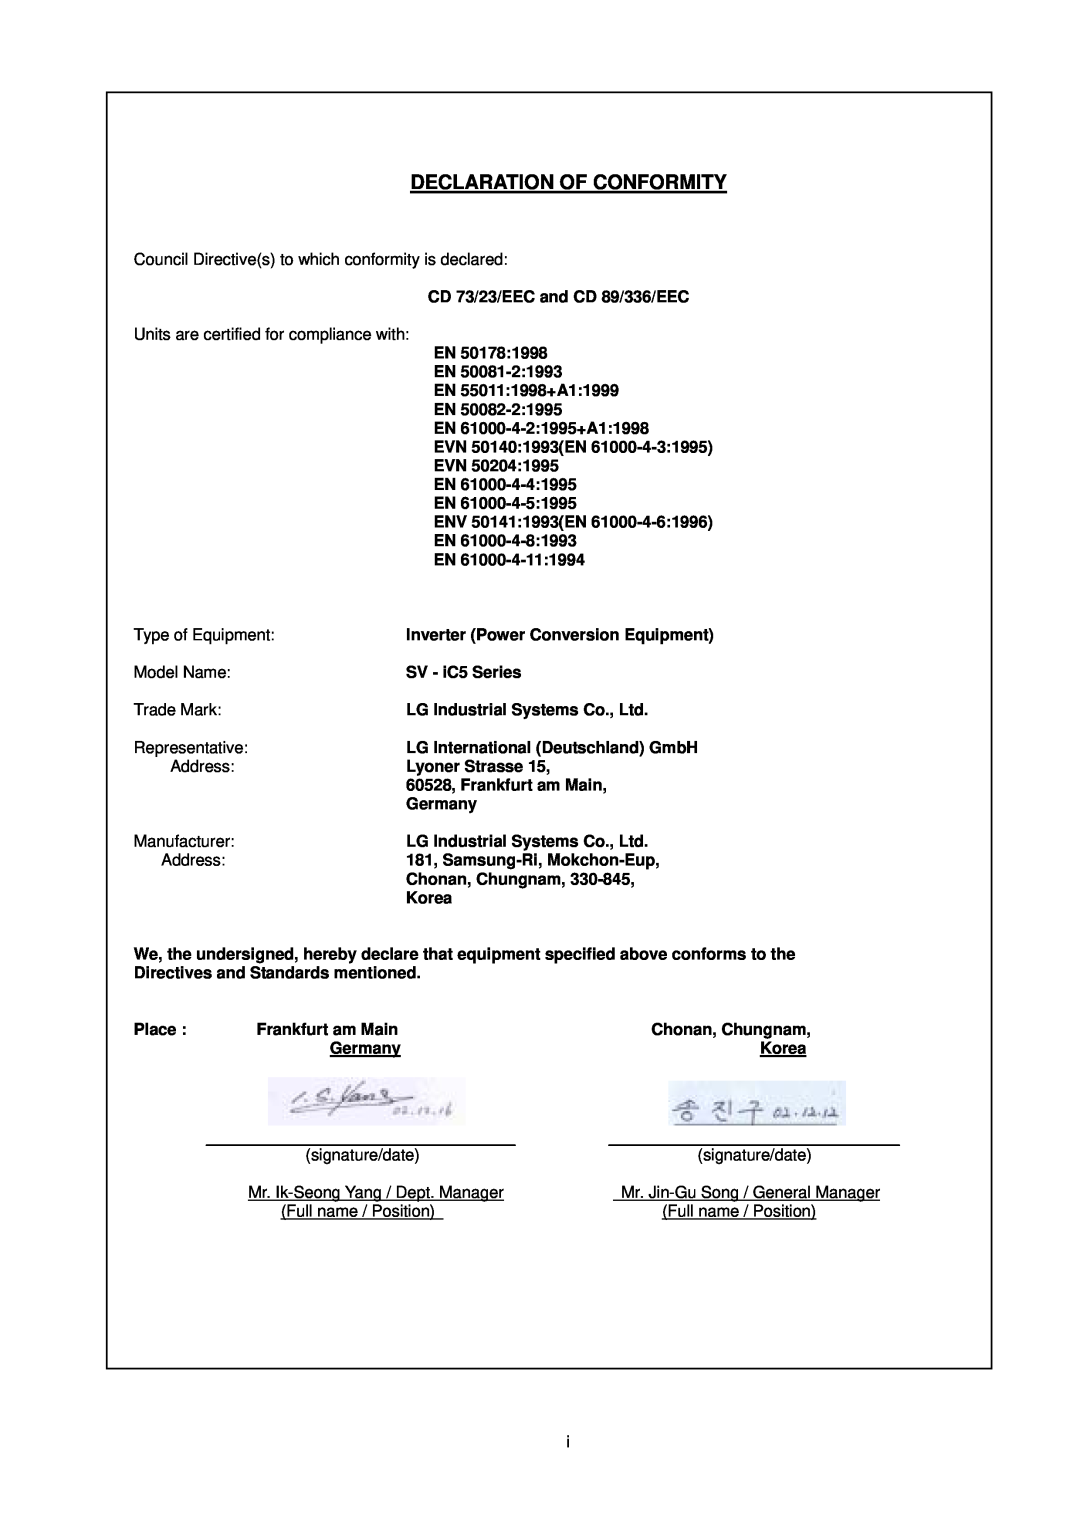 LG Electronics SV-iC5 Series Declaration Of Conformity, CD 73/23/EEC and CD 89/336/EEC, EVN EN EN ENV 501411993EN EN EN 